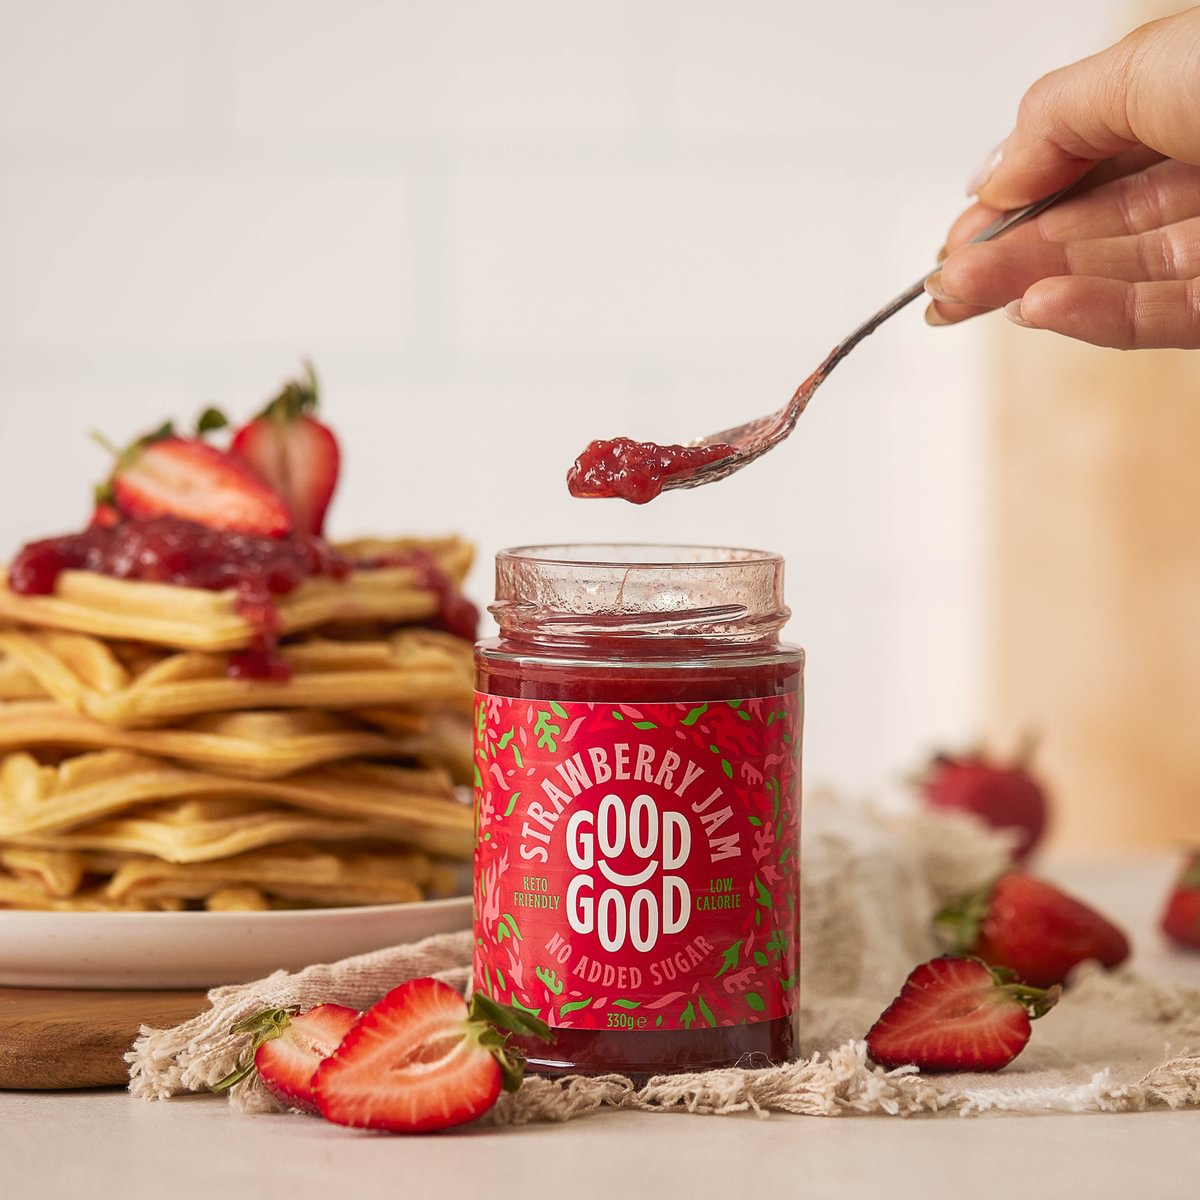 Strawberry Jam (330g) - No Added Sugar